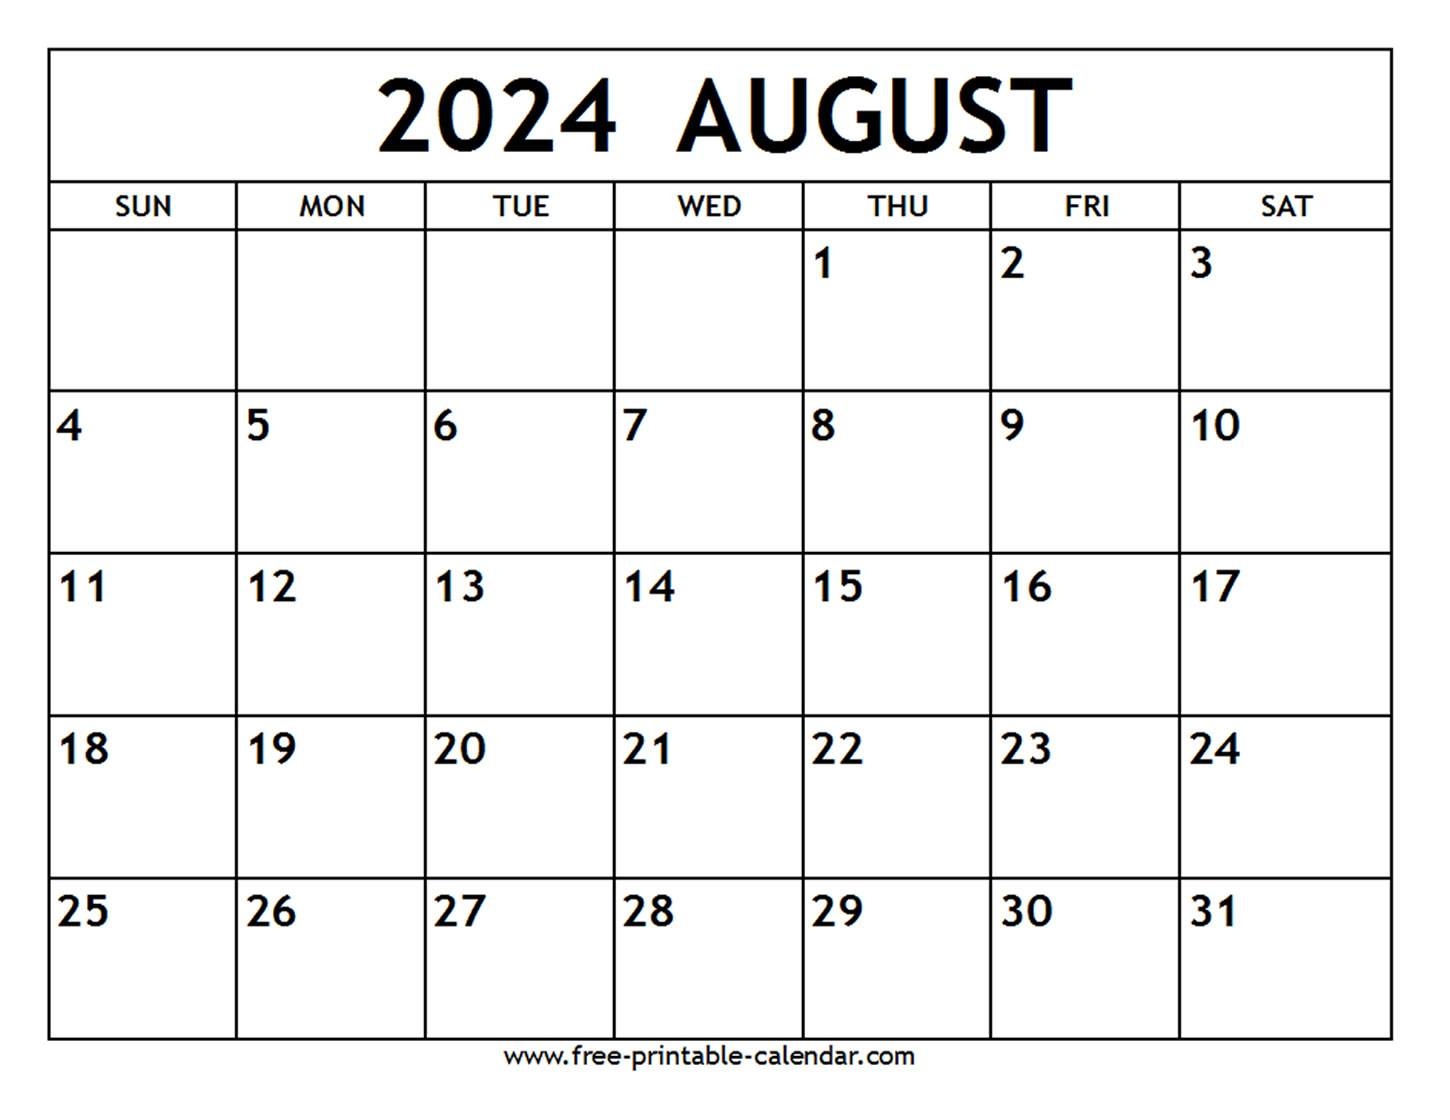 August 2024 Calendar - Free-Printable-Calendar pertaining to Free Printable August 2024 Calendar